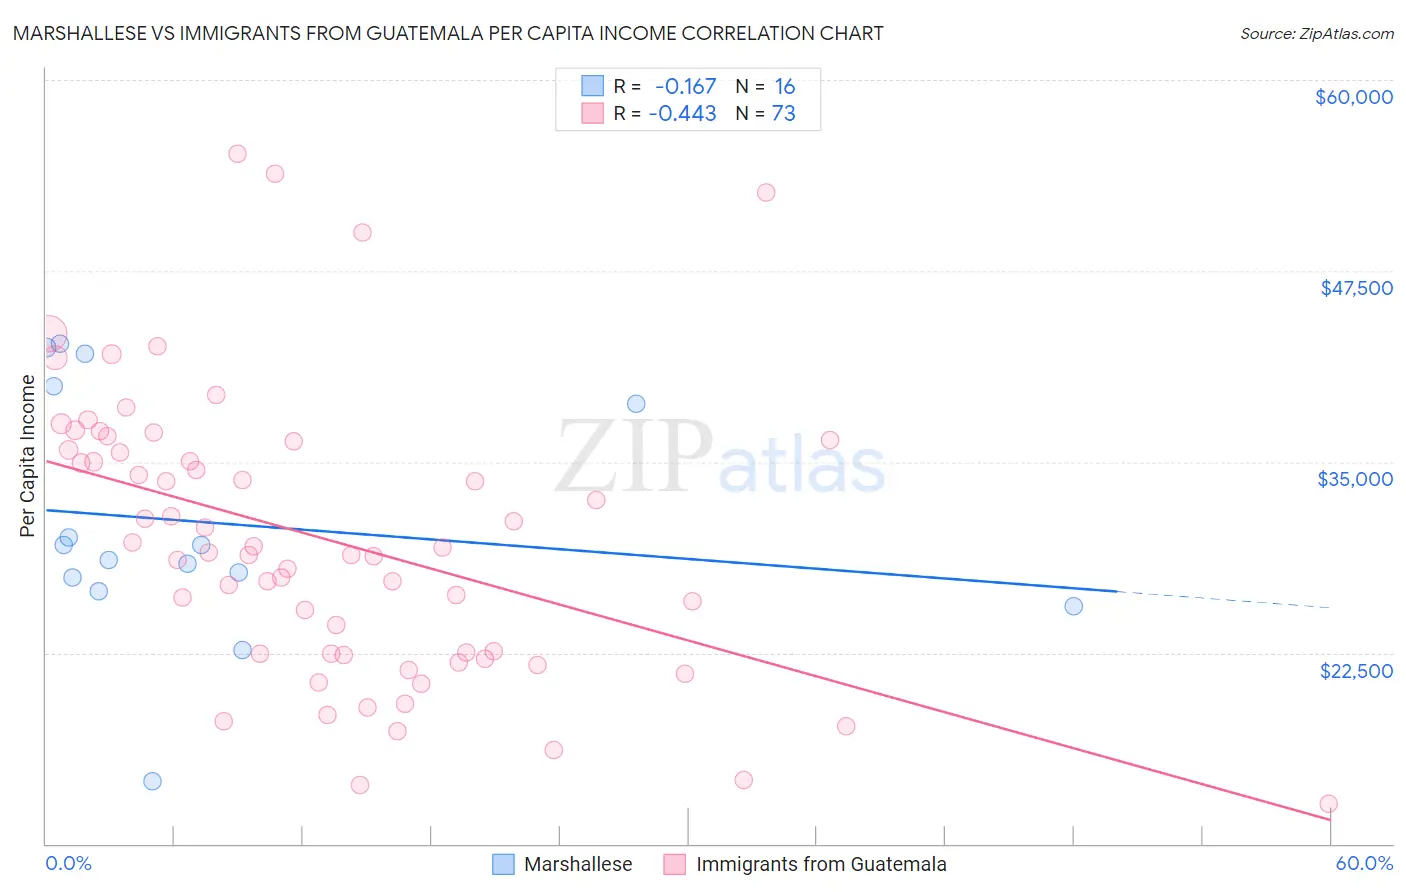 Marshallese vs Immigrants from Guatemala Per Capita Income